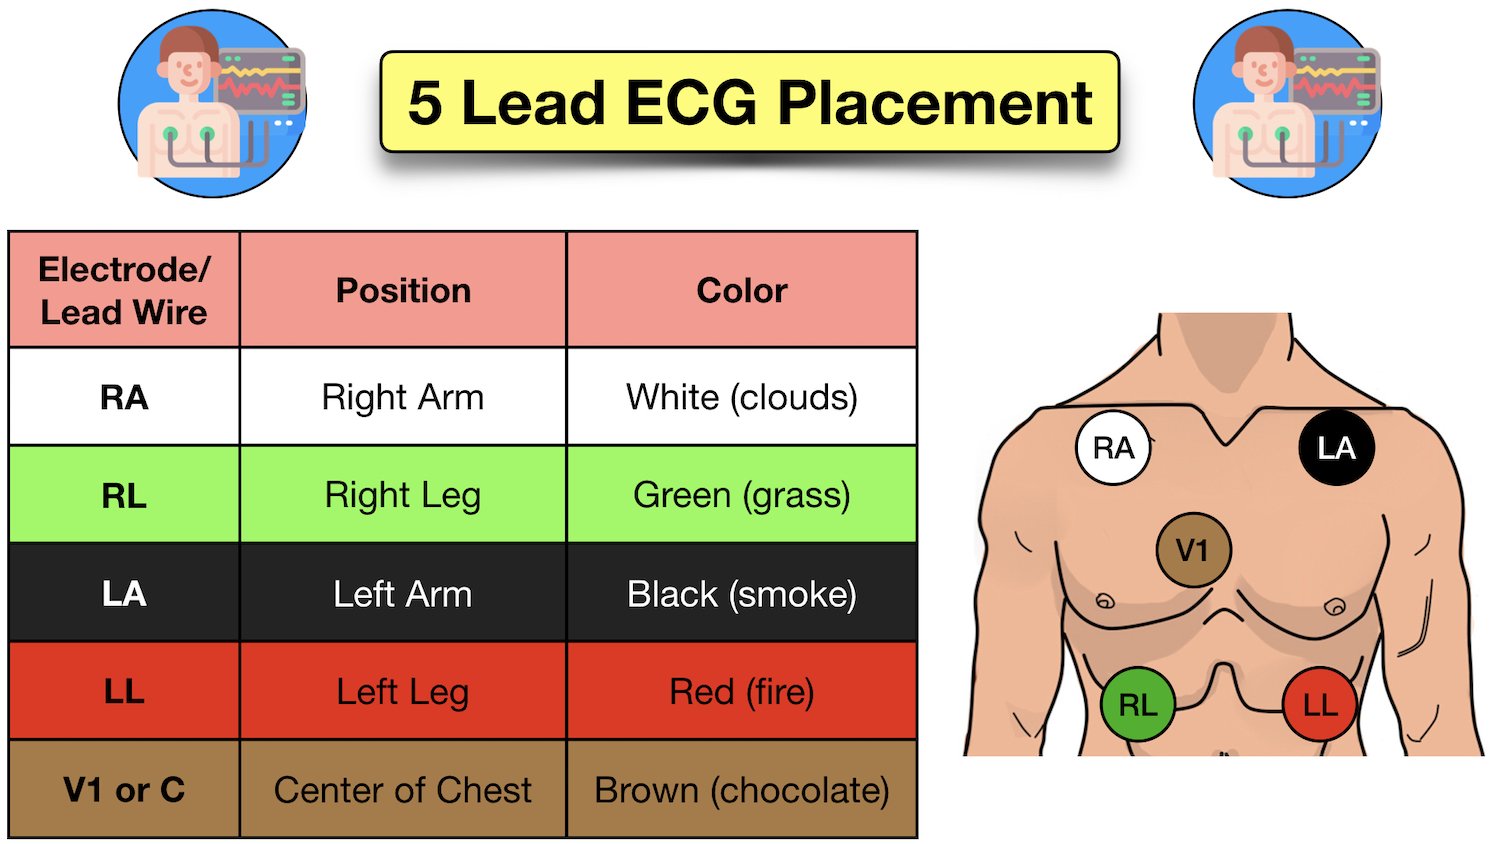 12 lead ecg placement mnemonic